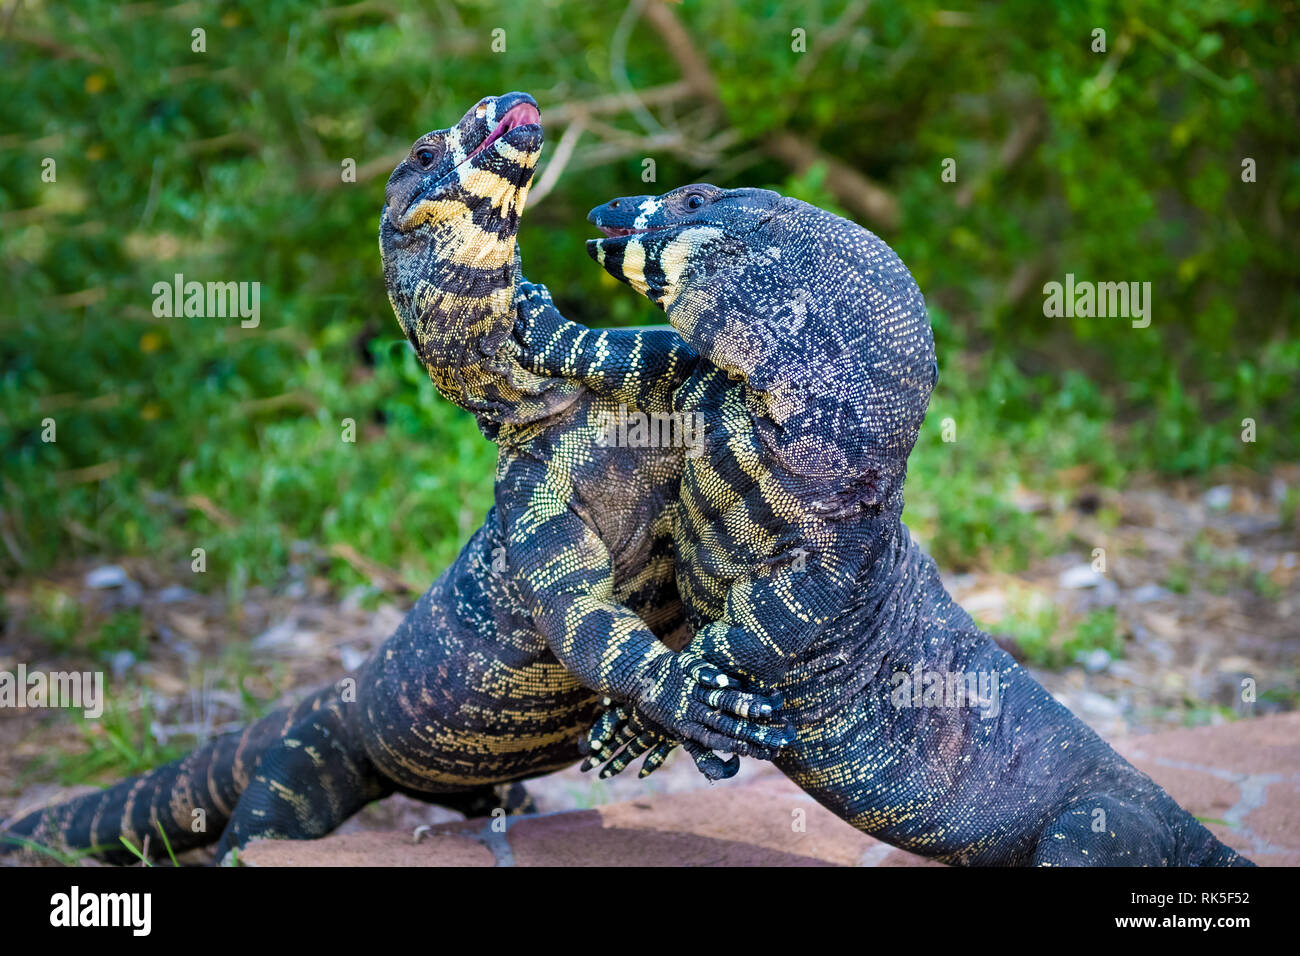 Lace Goannas, Australian monitor lizards fighting ferociously. Goanna features prominently in mythology and Australian folklore, wi Stock Photo - Alamy